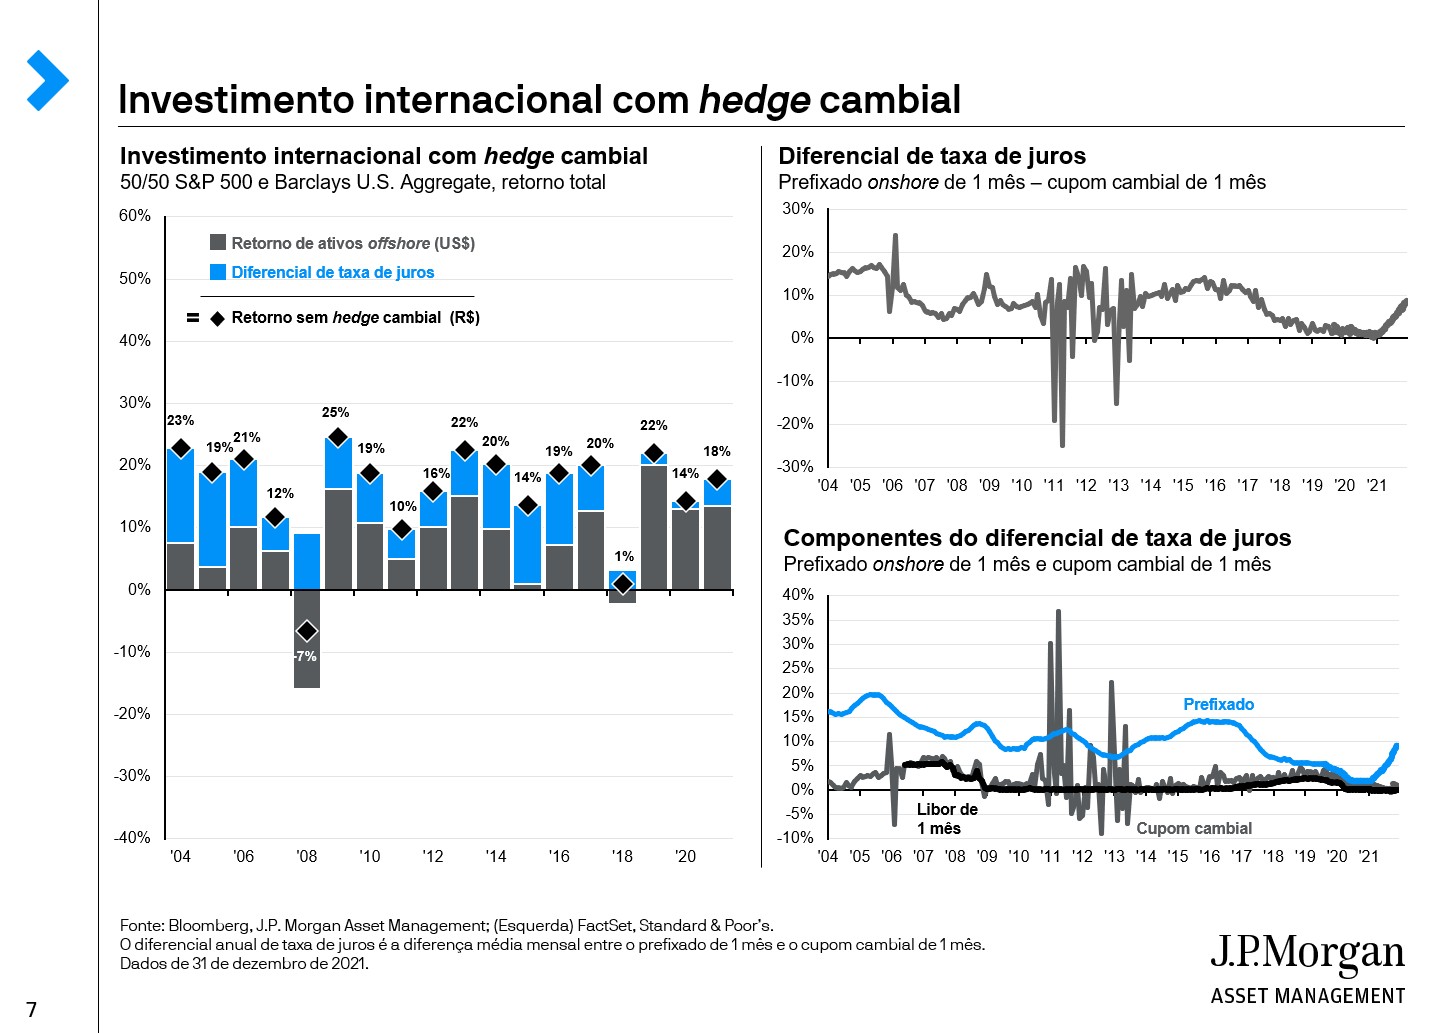 Hedged international investing